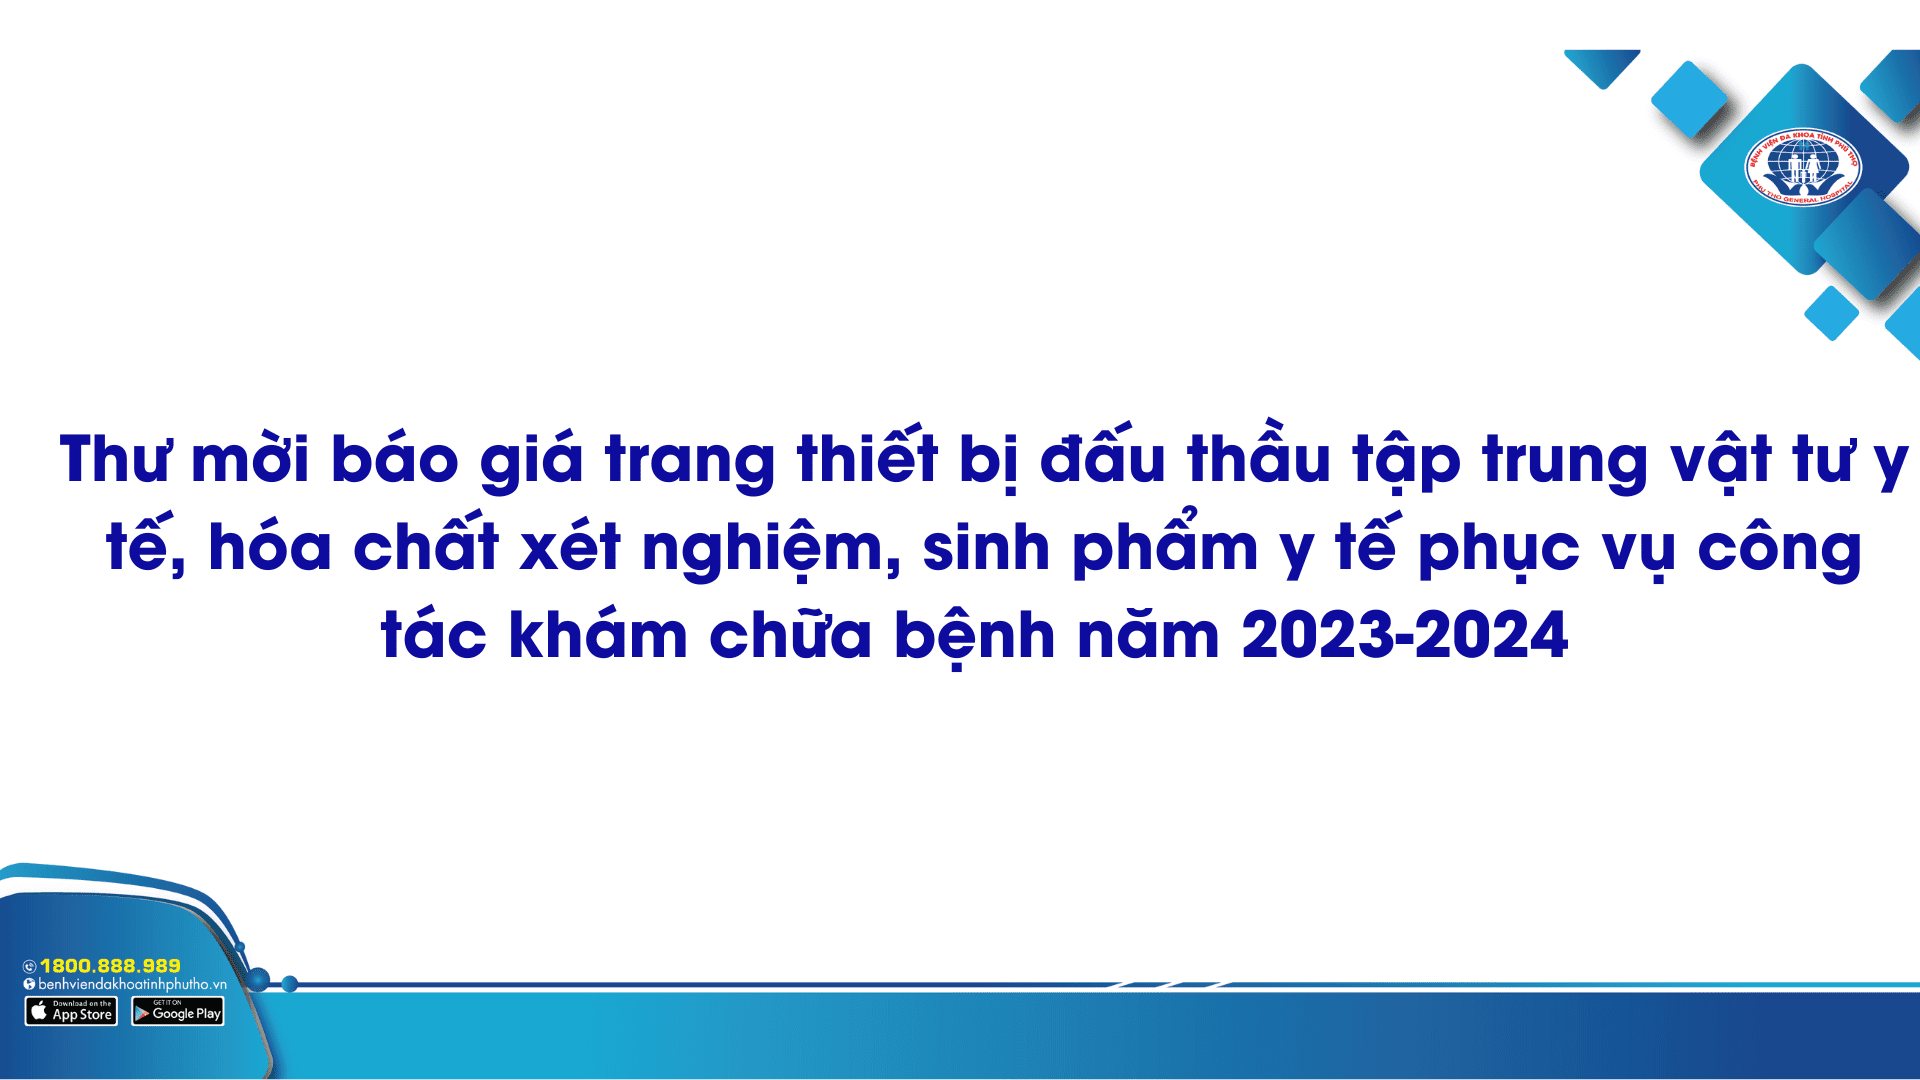 Thu moi bao gia trang thiet bi dau thau tap trung vat tu y te hoa chat xet nghiem sinh pham y te phuc vu cong tac kham chua benh nam 2023 2024